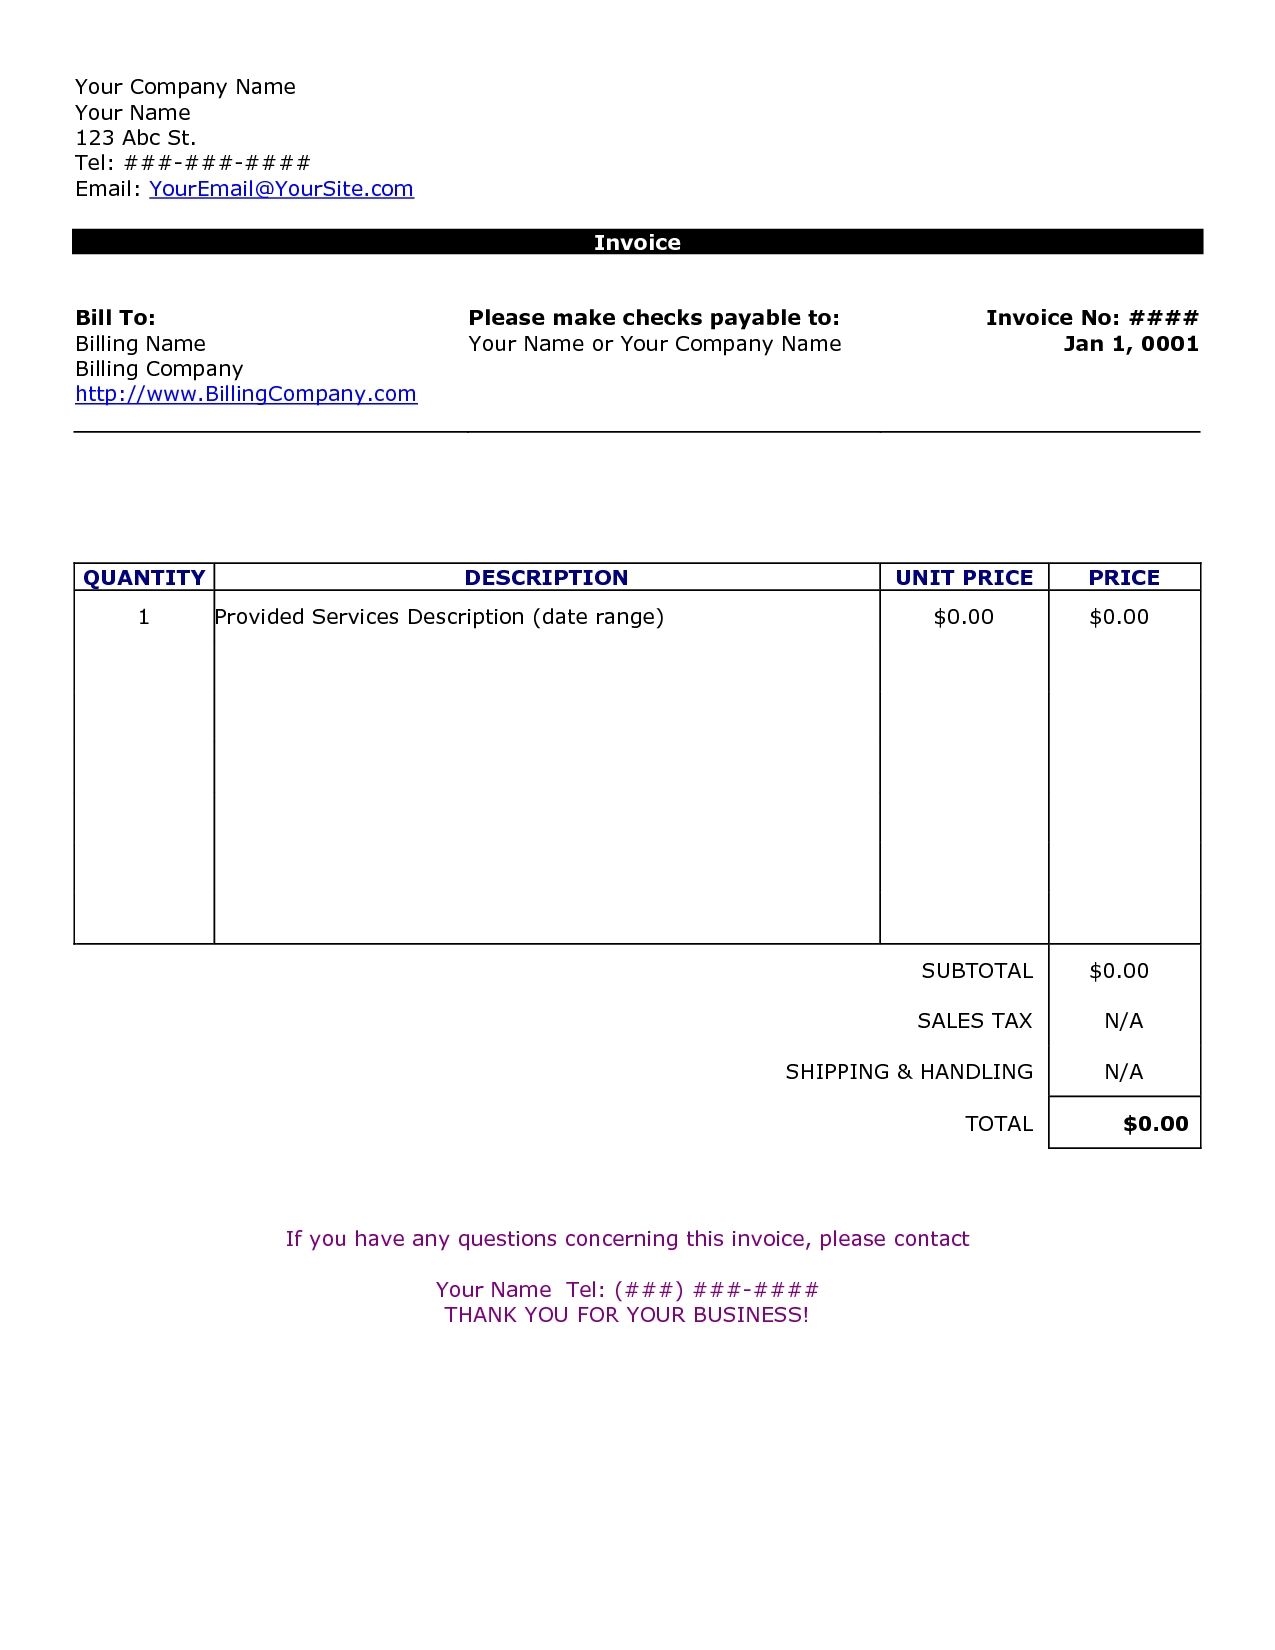 custom invoice format customizable form templates customs format of custom invoice